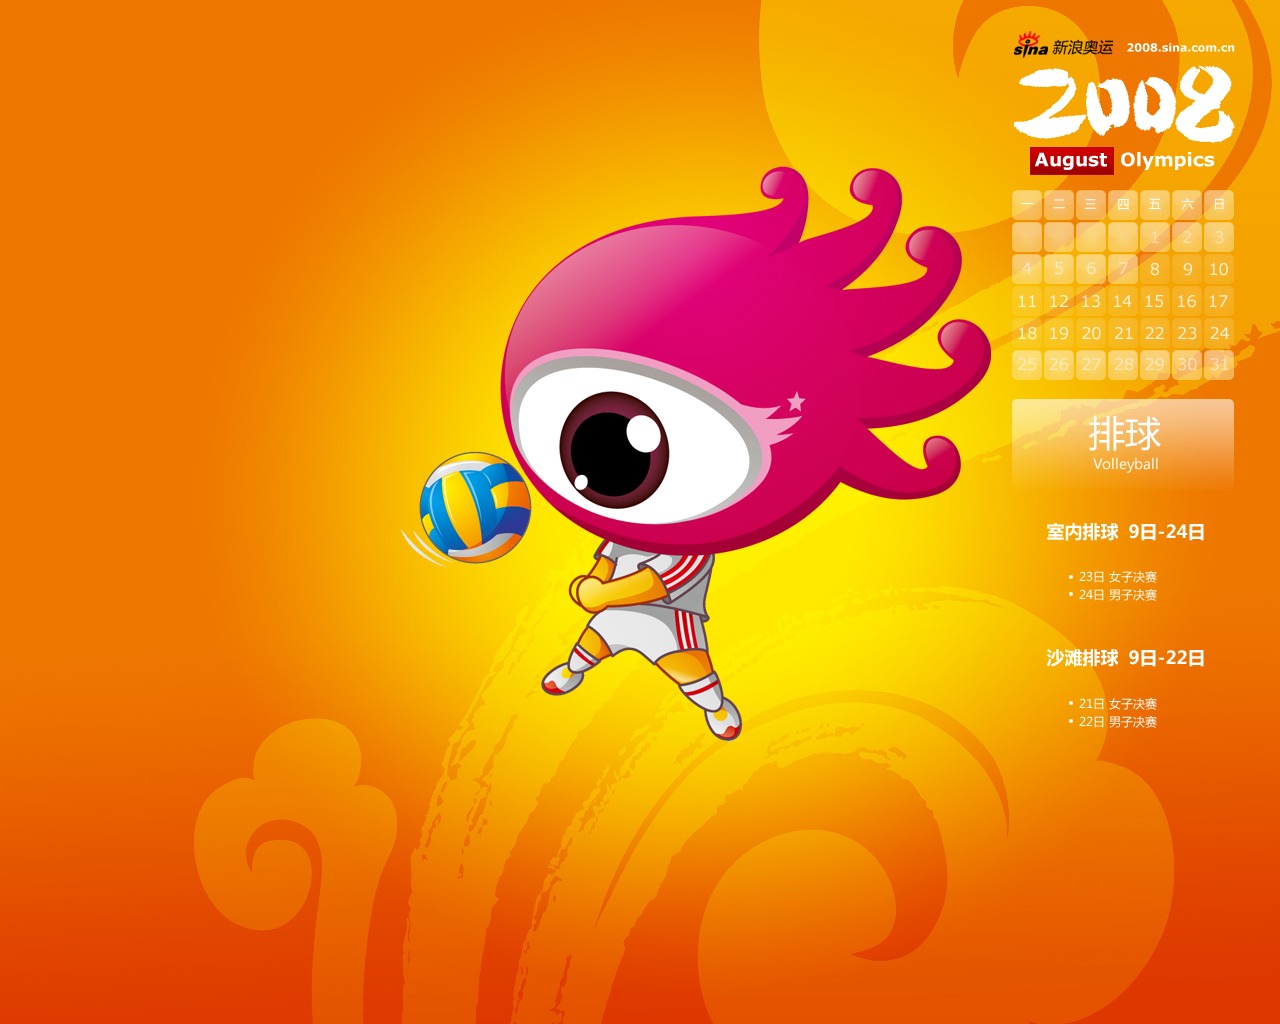 Sina Olympics Wallpaper Serie #12 - 1280x1024